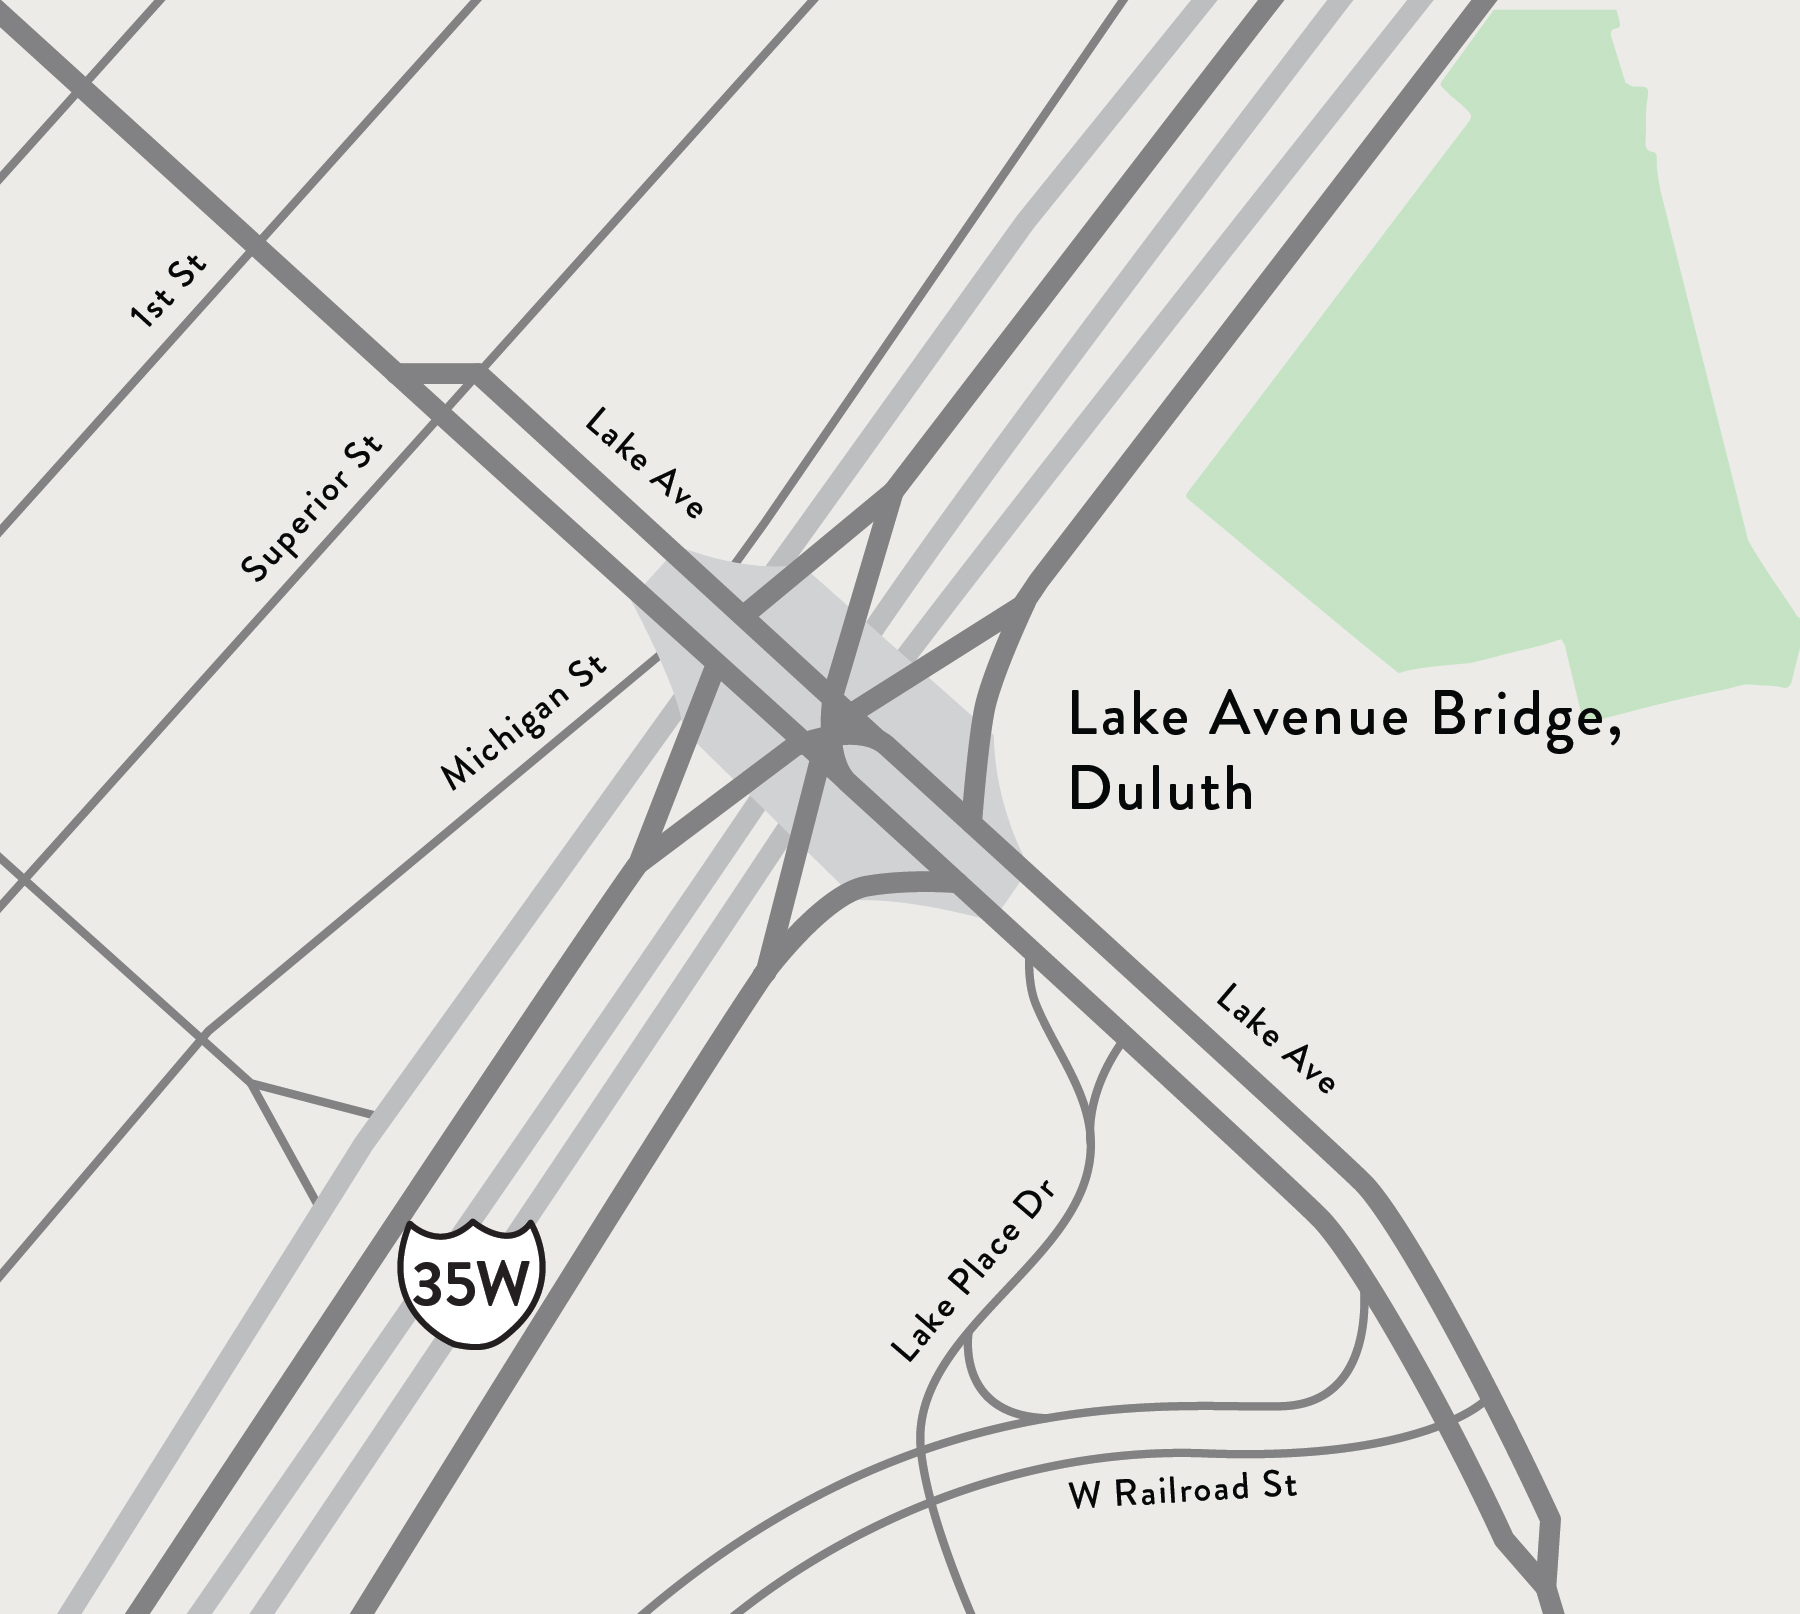 Location map of the Lake Avenue Bridge project